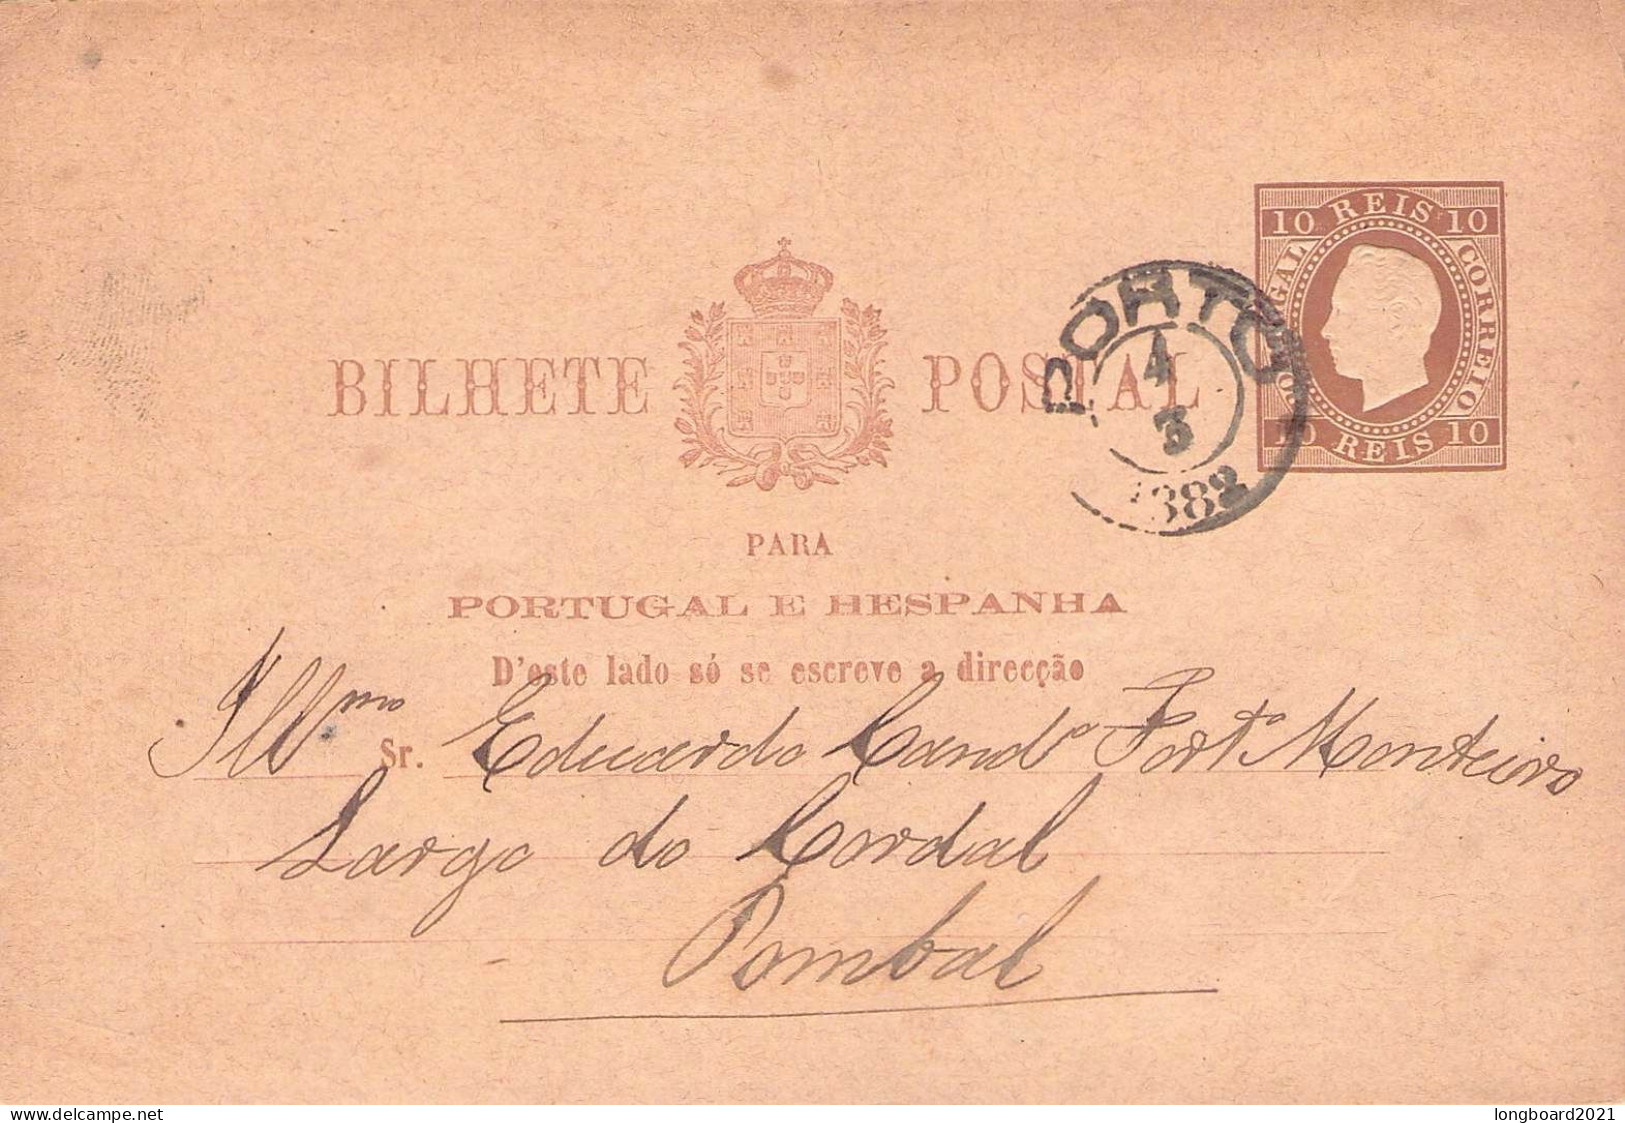 PORTUGAL - BILHETE POSTAL 10 REIS (1882) Mi P7 / *1007 - Interi Postali